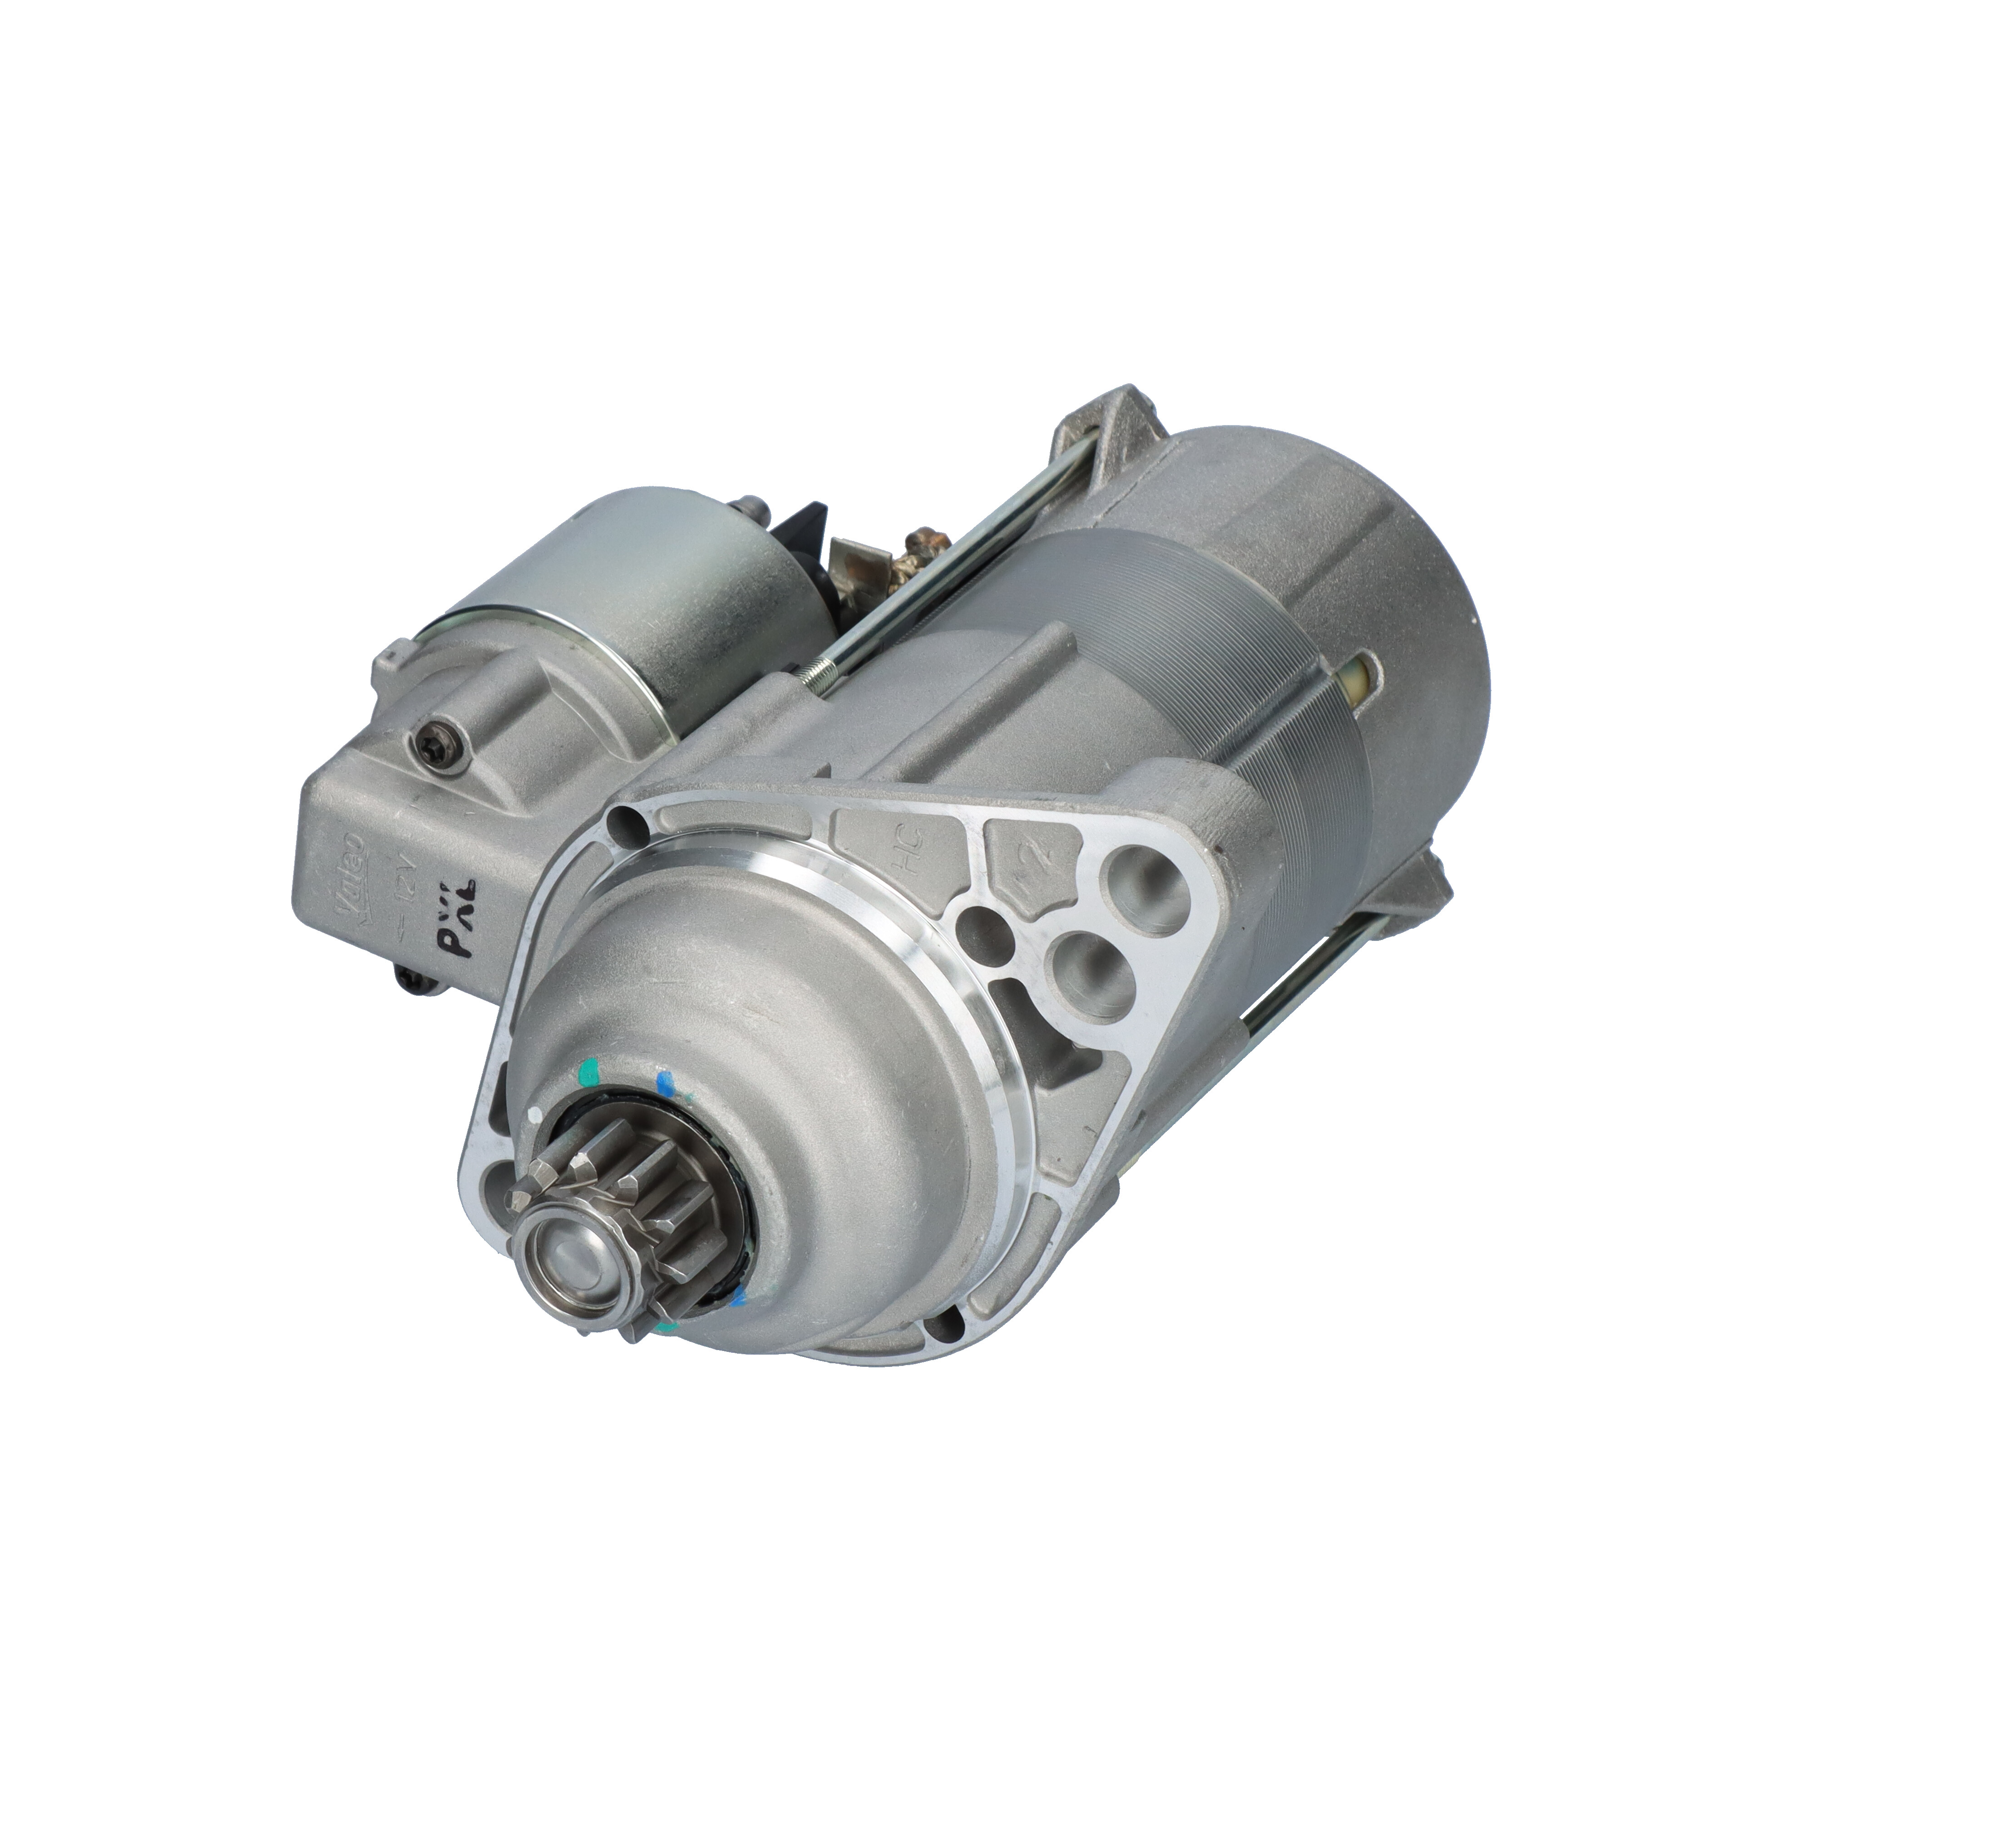 VALEO 460434 Starter motor AUDI experience and price